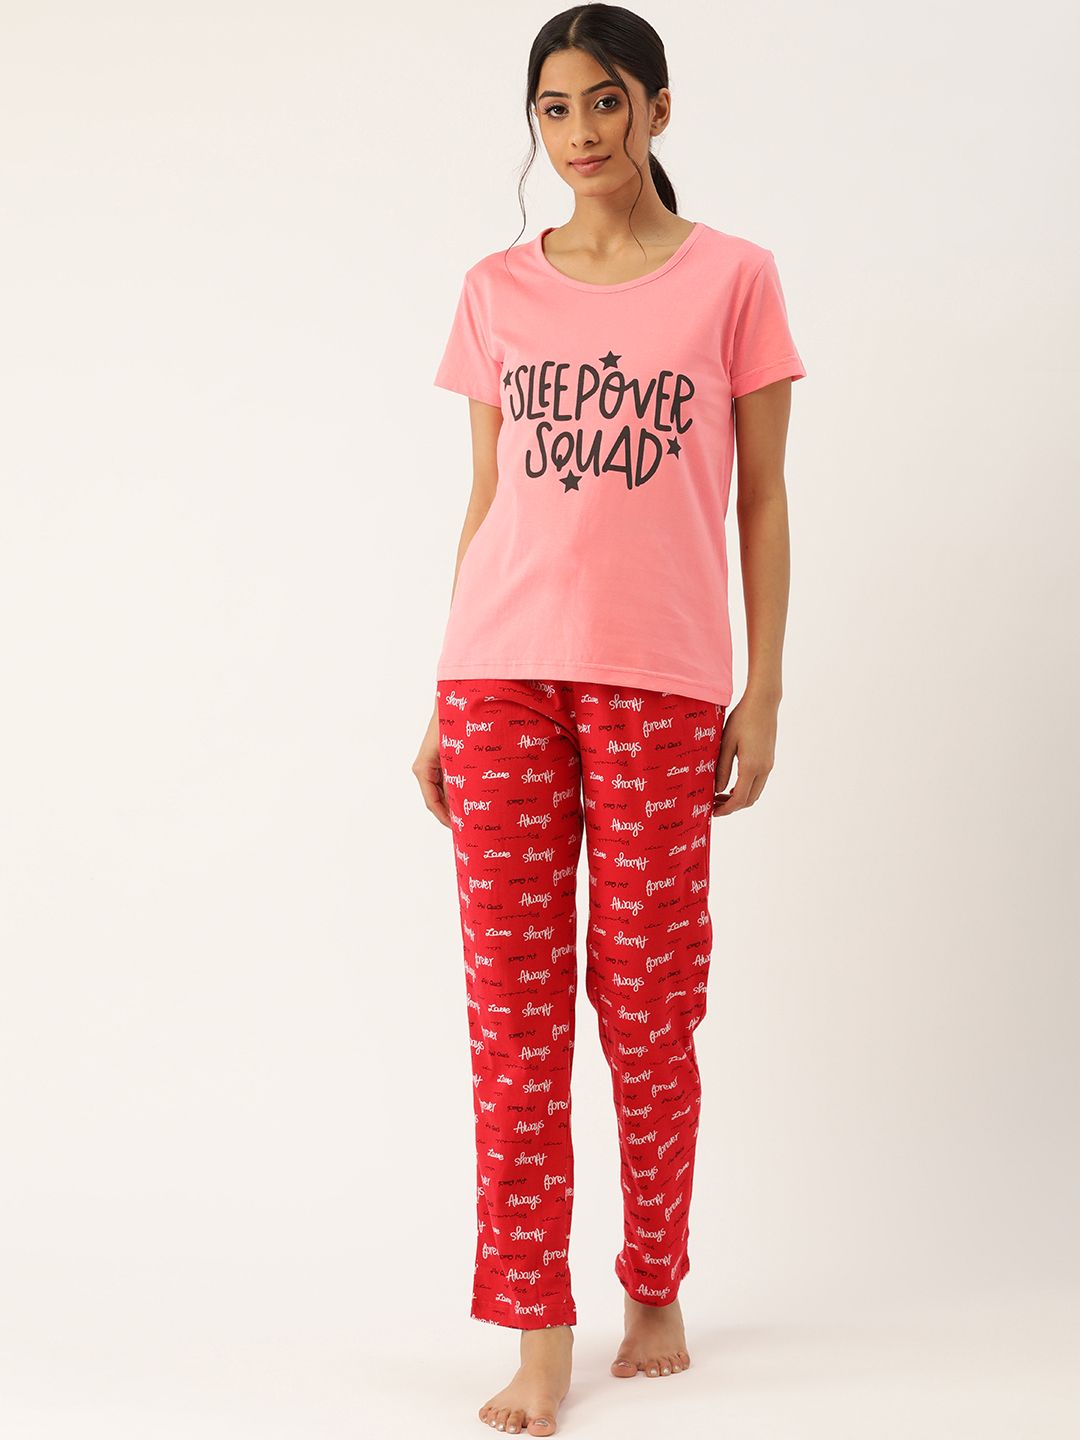 Nite Flite Women Pink & Red Printed Sleepover Squad Pyjama Set Price in India